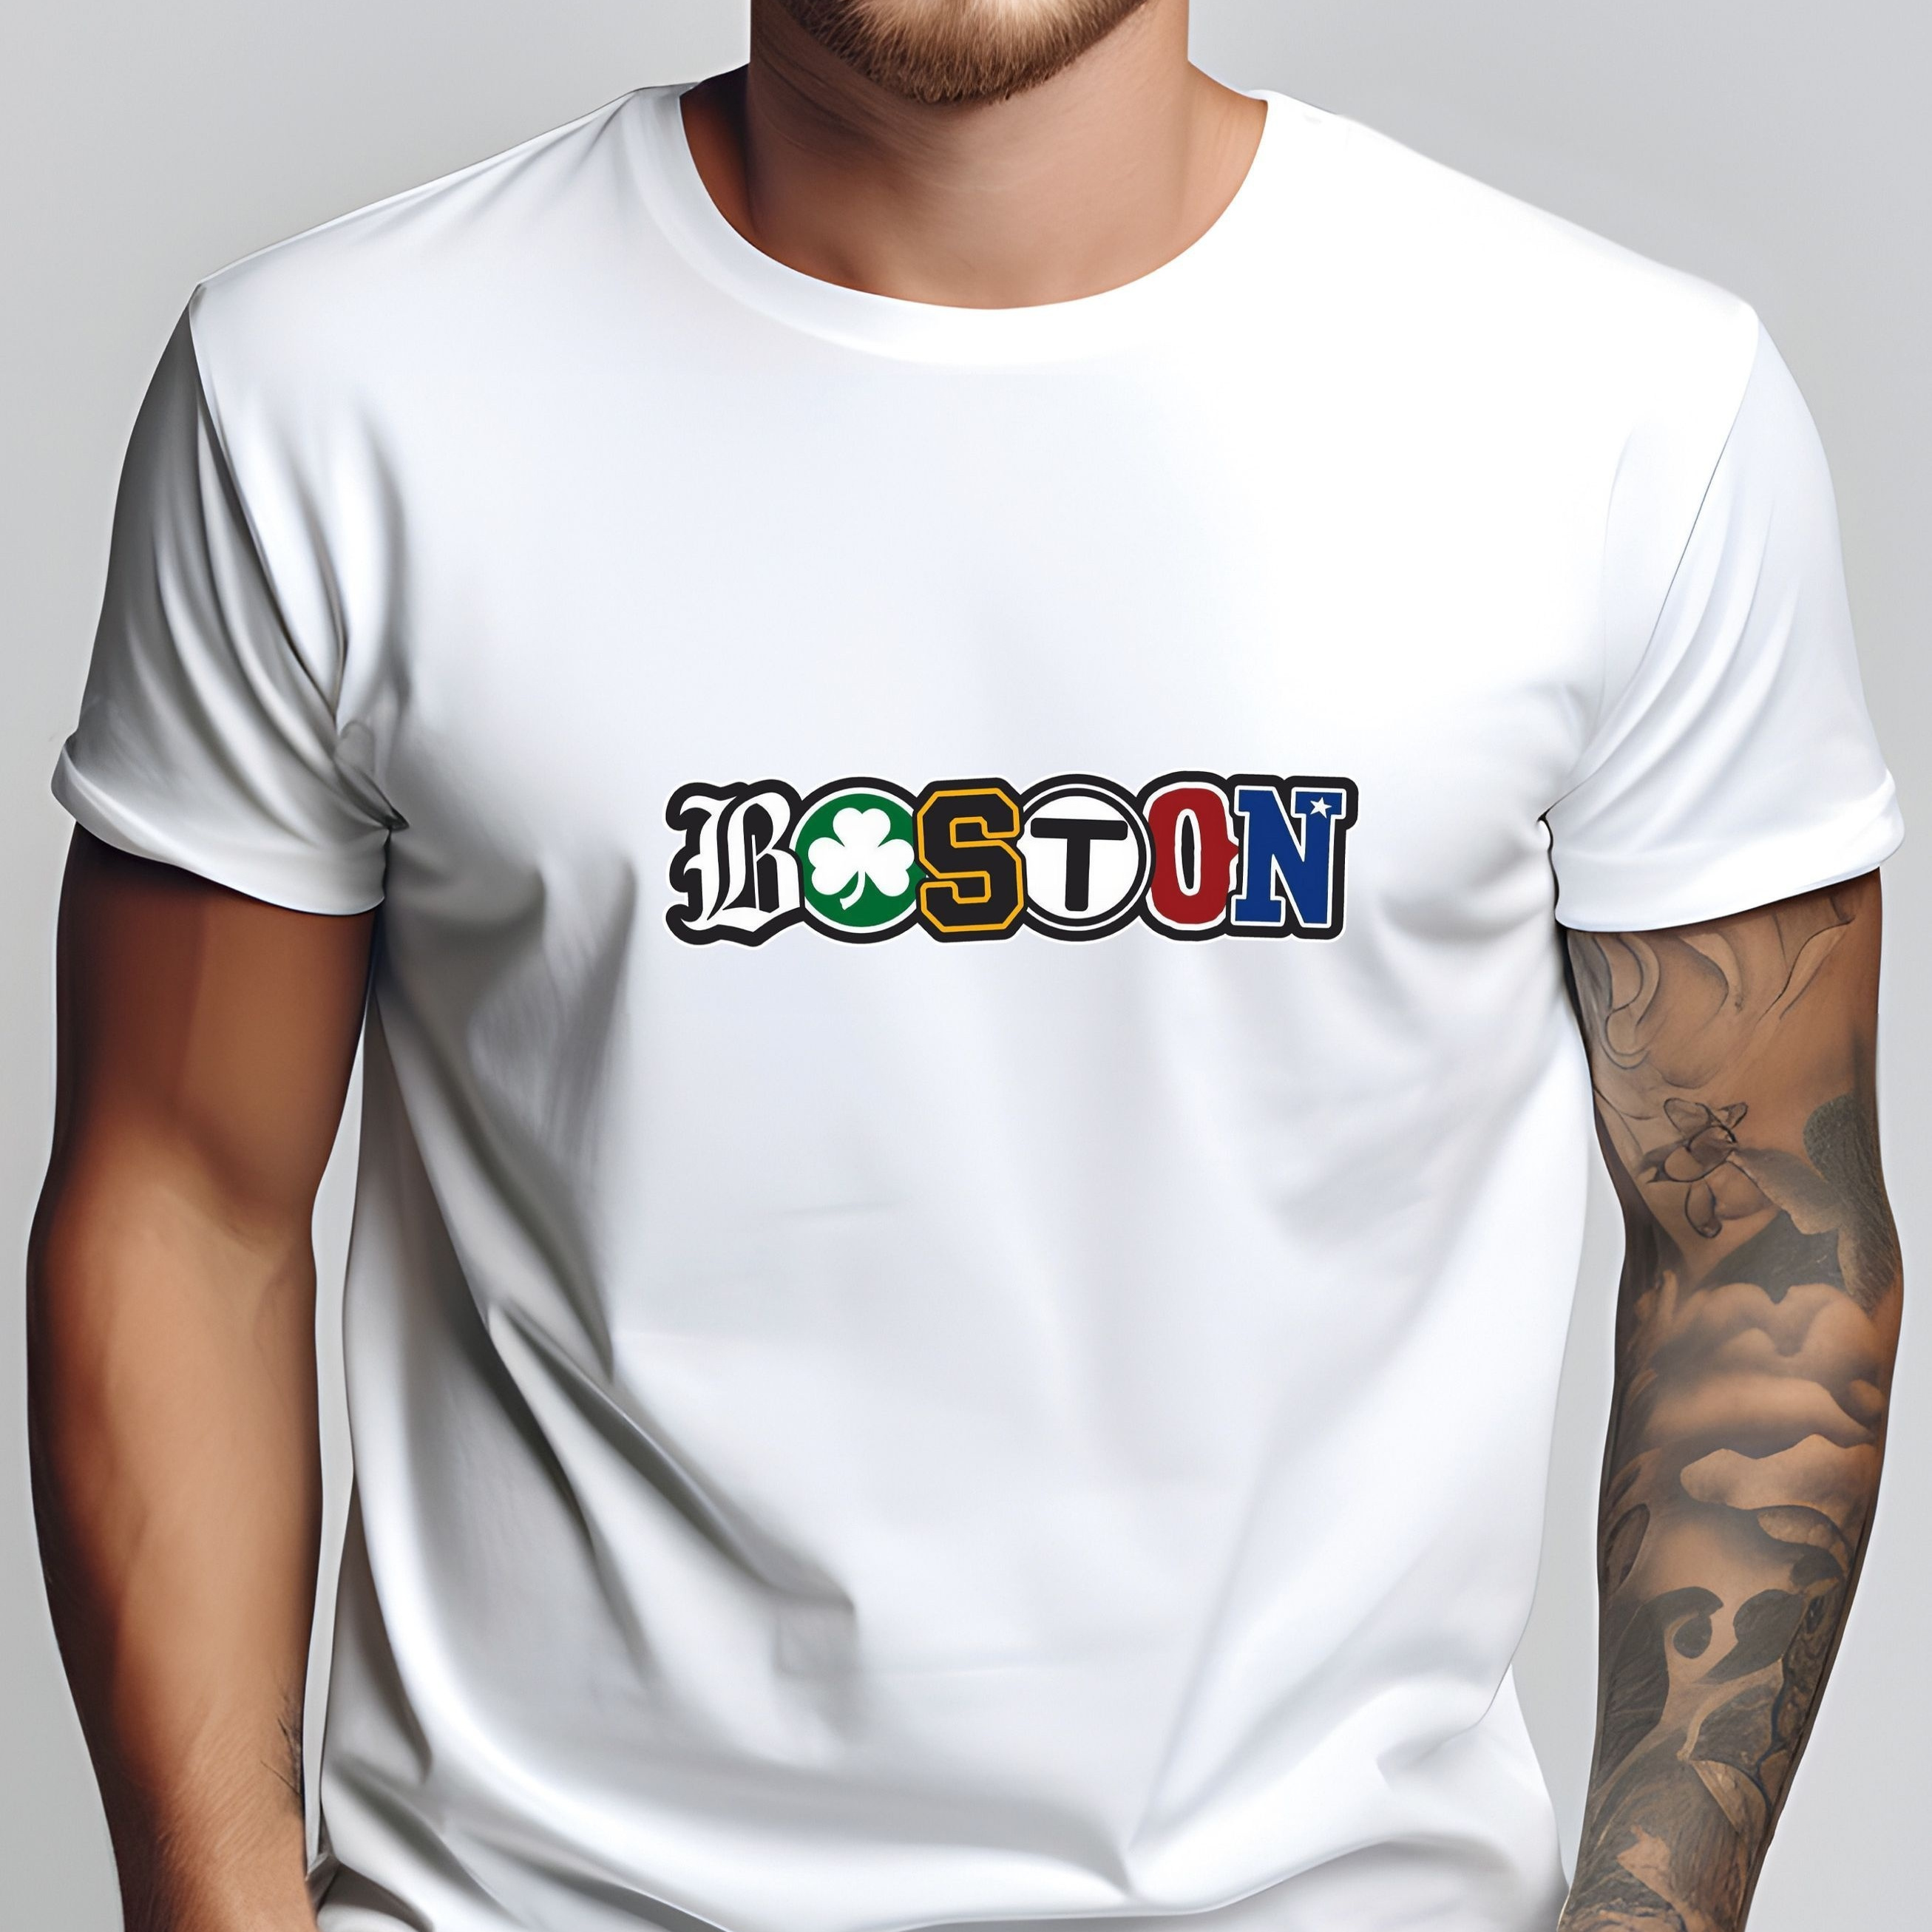 

Boston Print Tee Shirt, Tees For Men, Casual Short Sleeve T-shirt For Summer